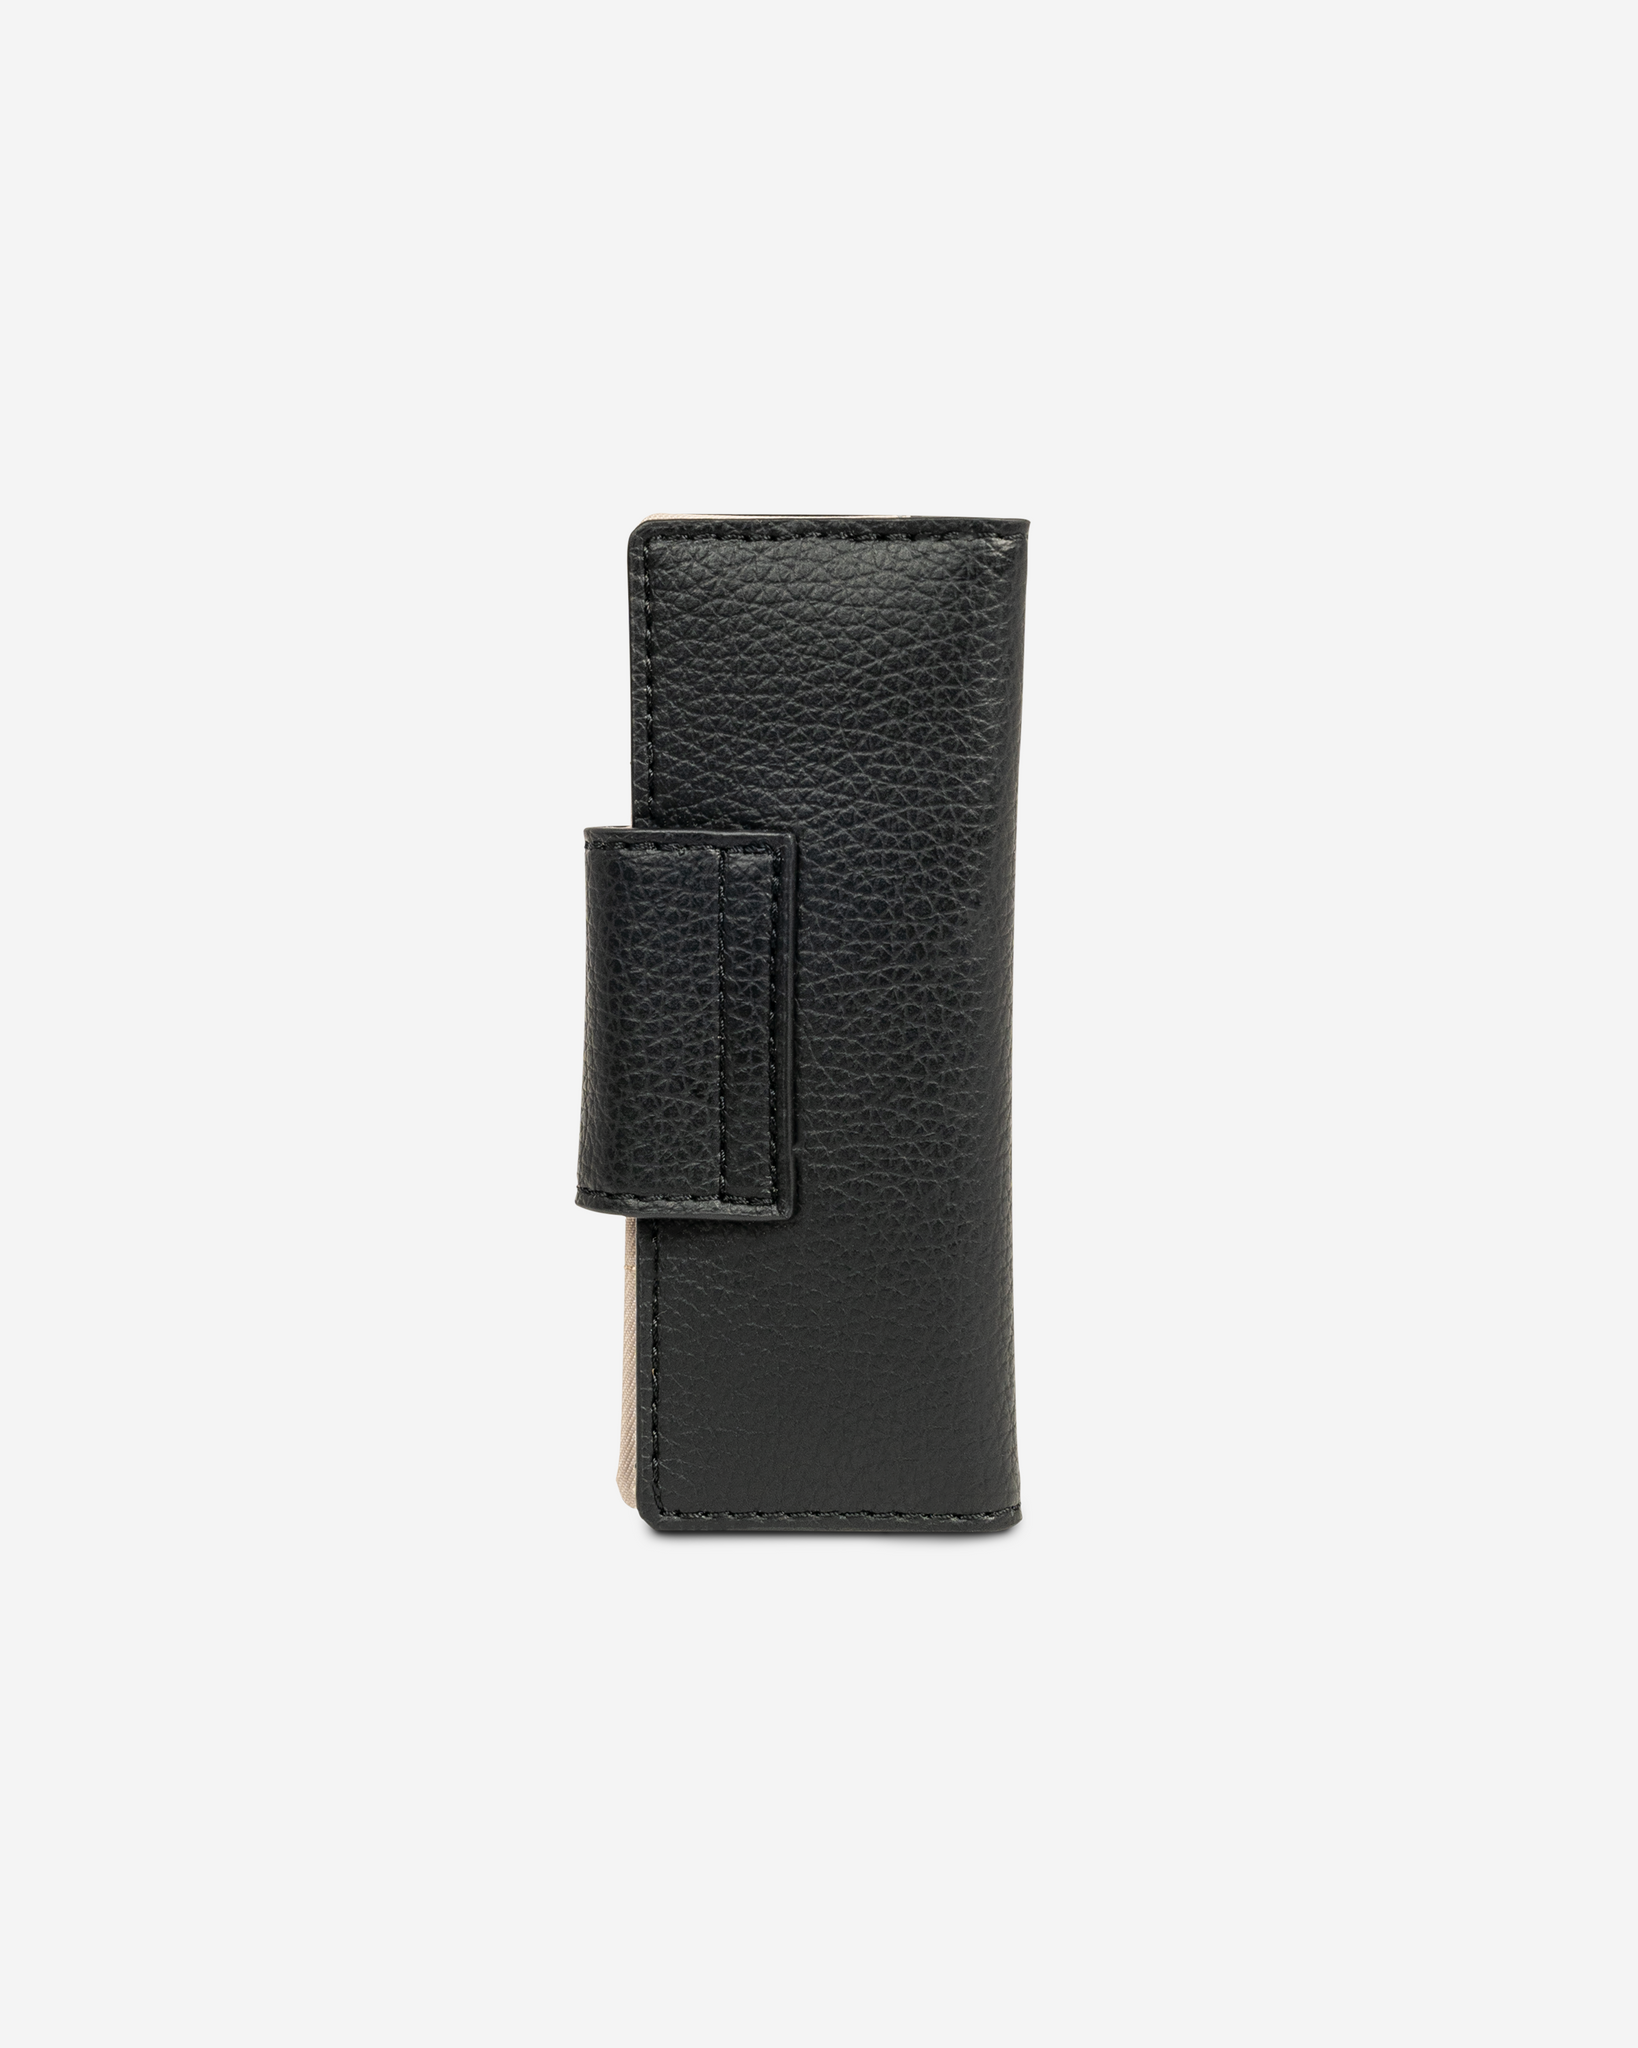 SD Card Pocket Organiser (Black)